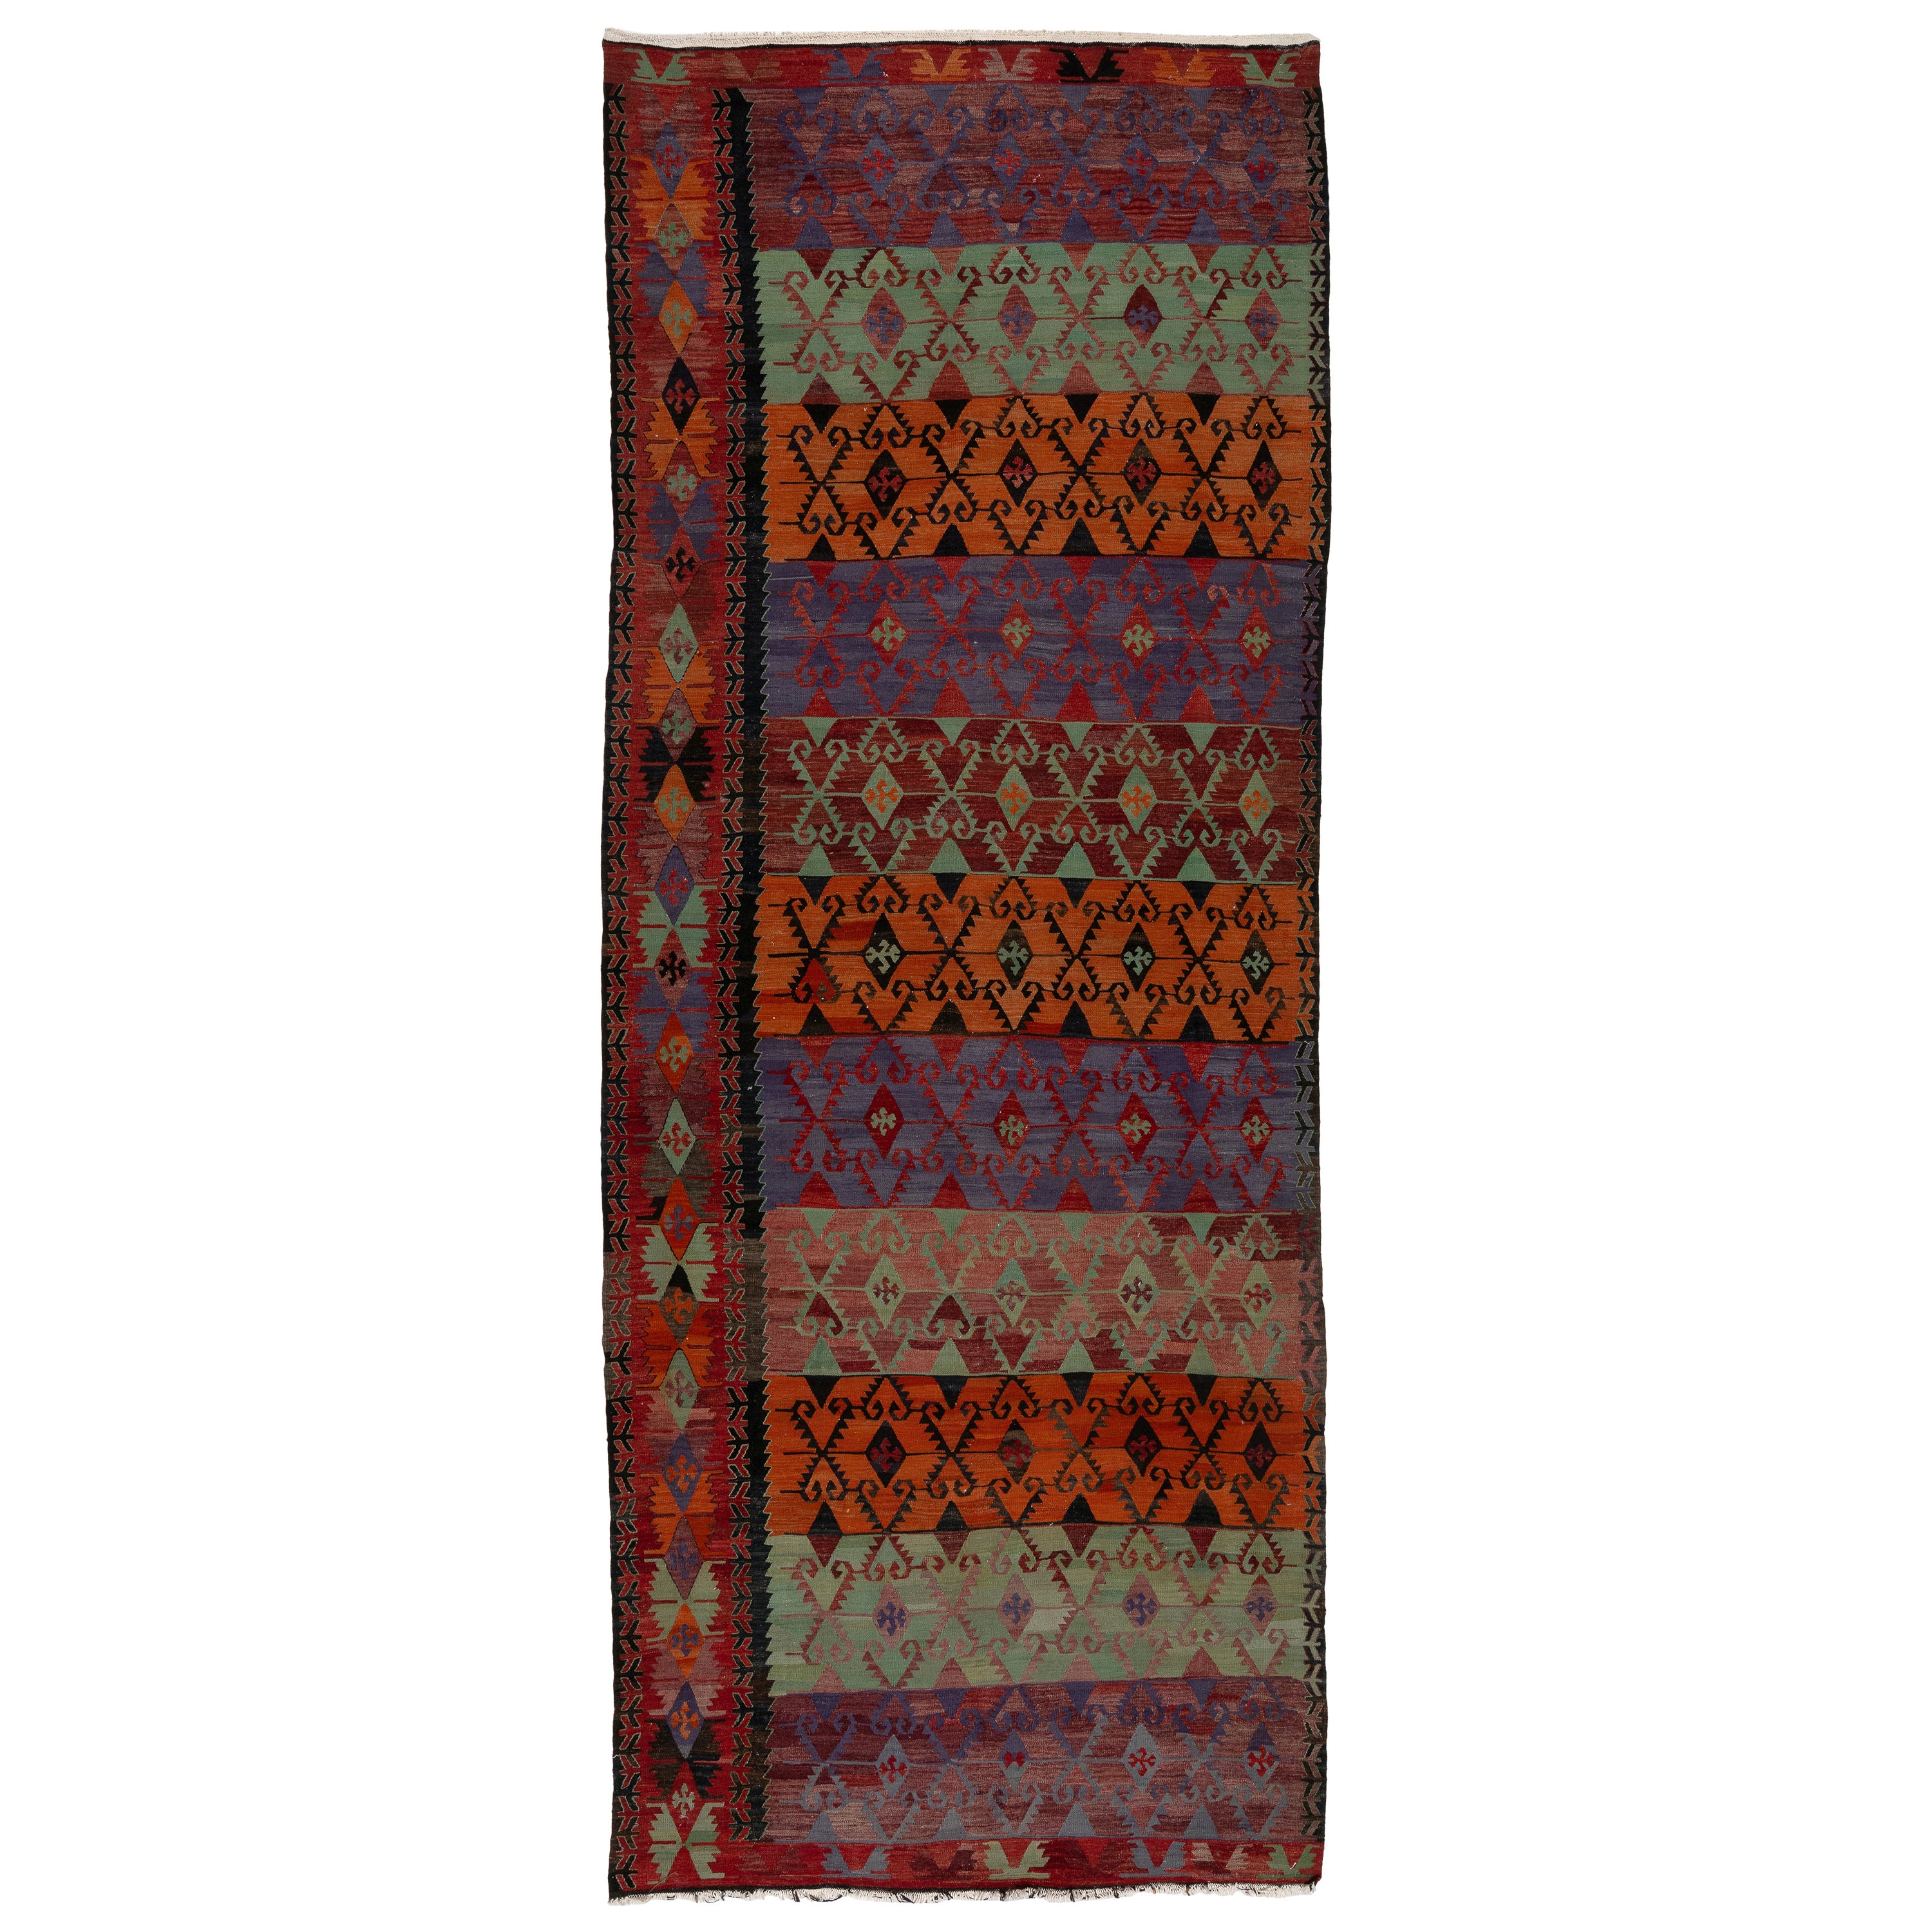 5.2x13.2 Ft Rare Vintage Anatolian Kilim, FlatWoven Floor Covering, Colorful Rug